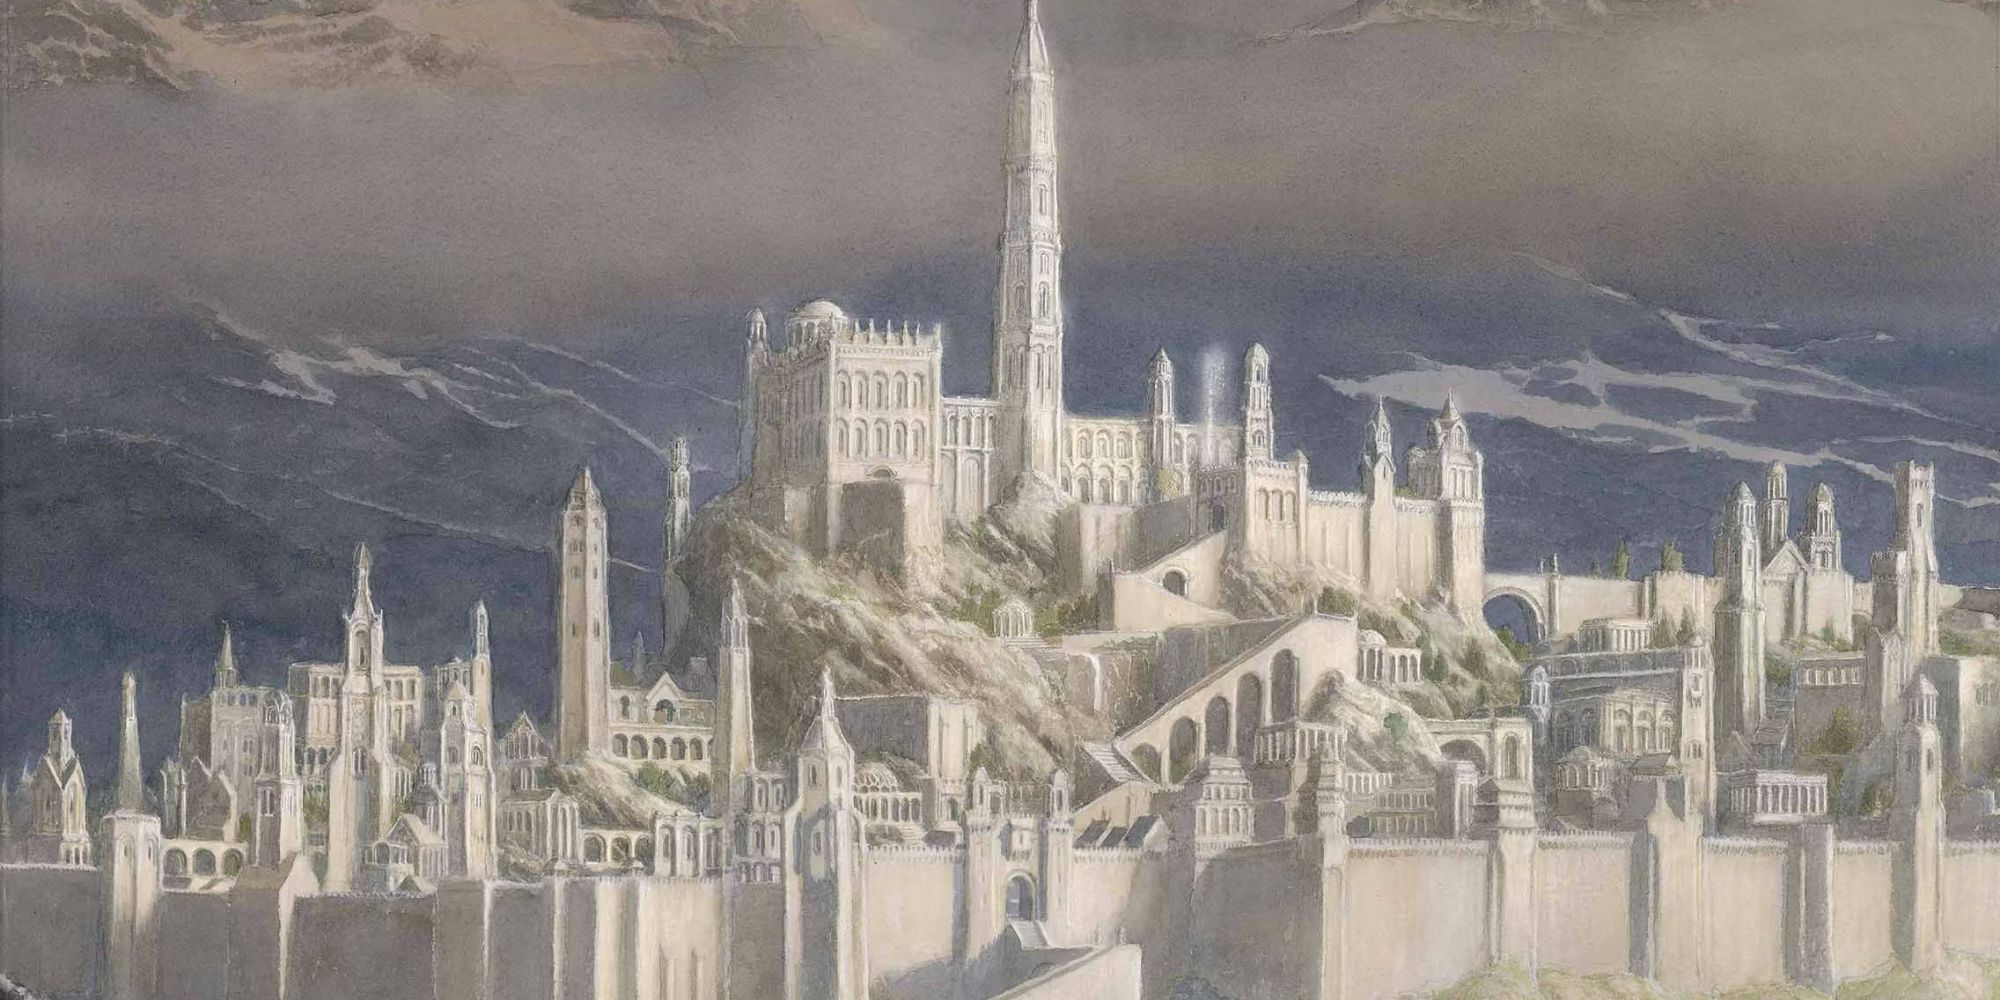 Capa do livro A Queda de Gondolin Tolkien (1)